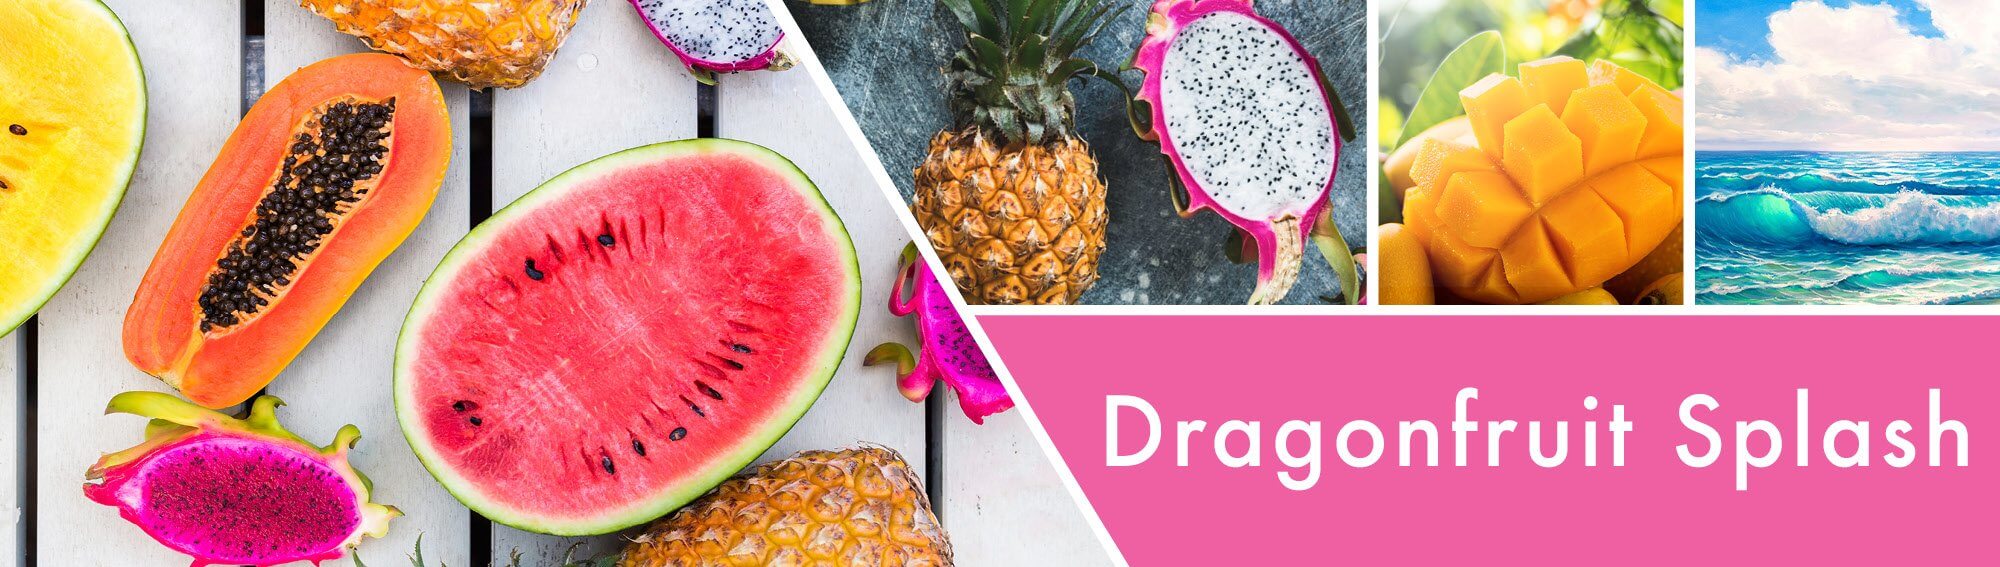 Dragonfruit-Splash